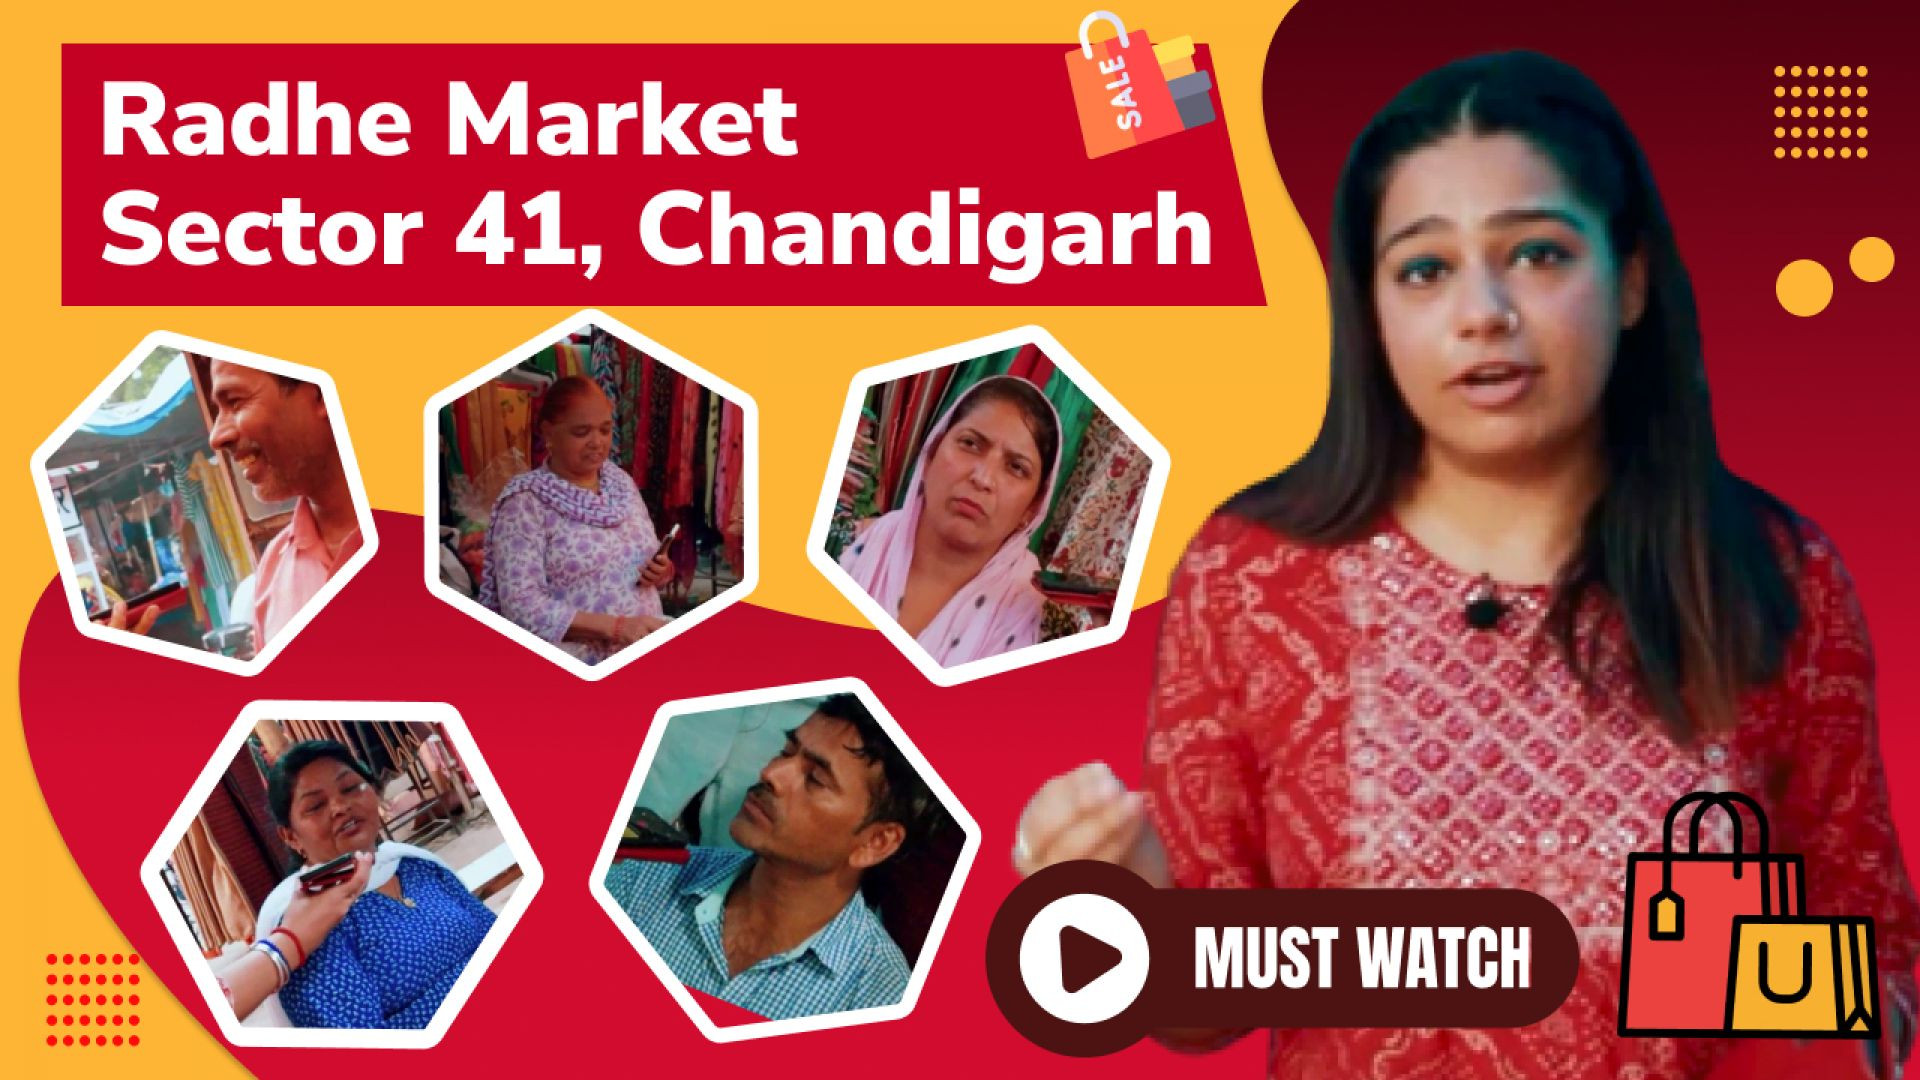 Local value for money shopping - Radhe Market Sector 41, Chandigarh |  S01E09 #letsgolocal